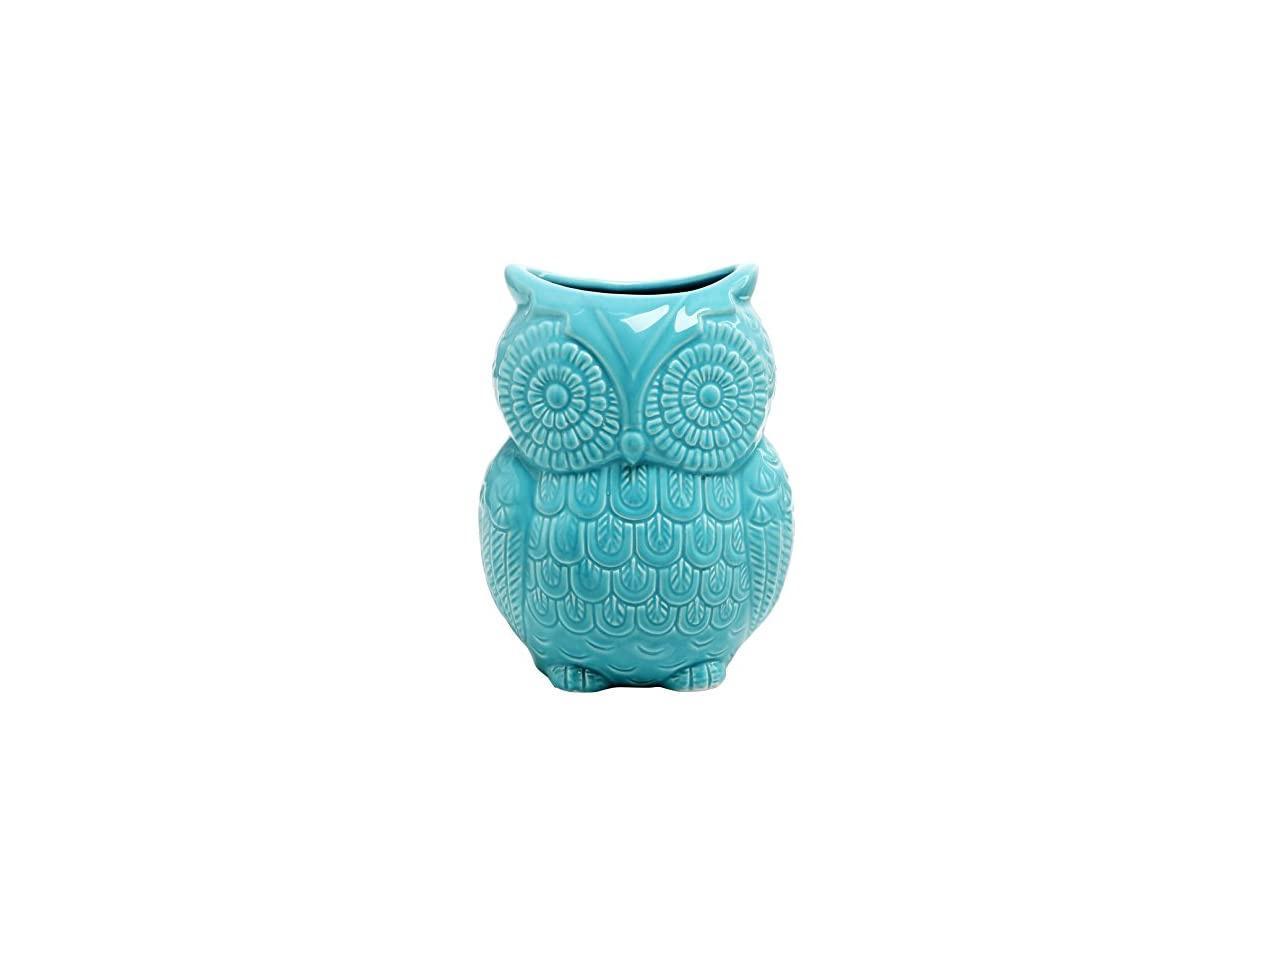 Aqua Blue Owl Design Ceramic Cooking Utensil Holder/Kitchen Storage Crock 